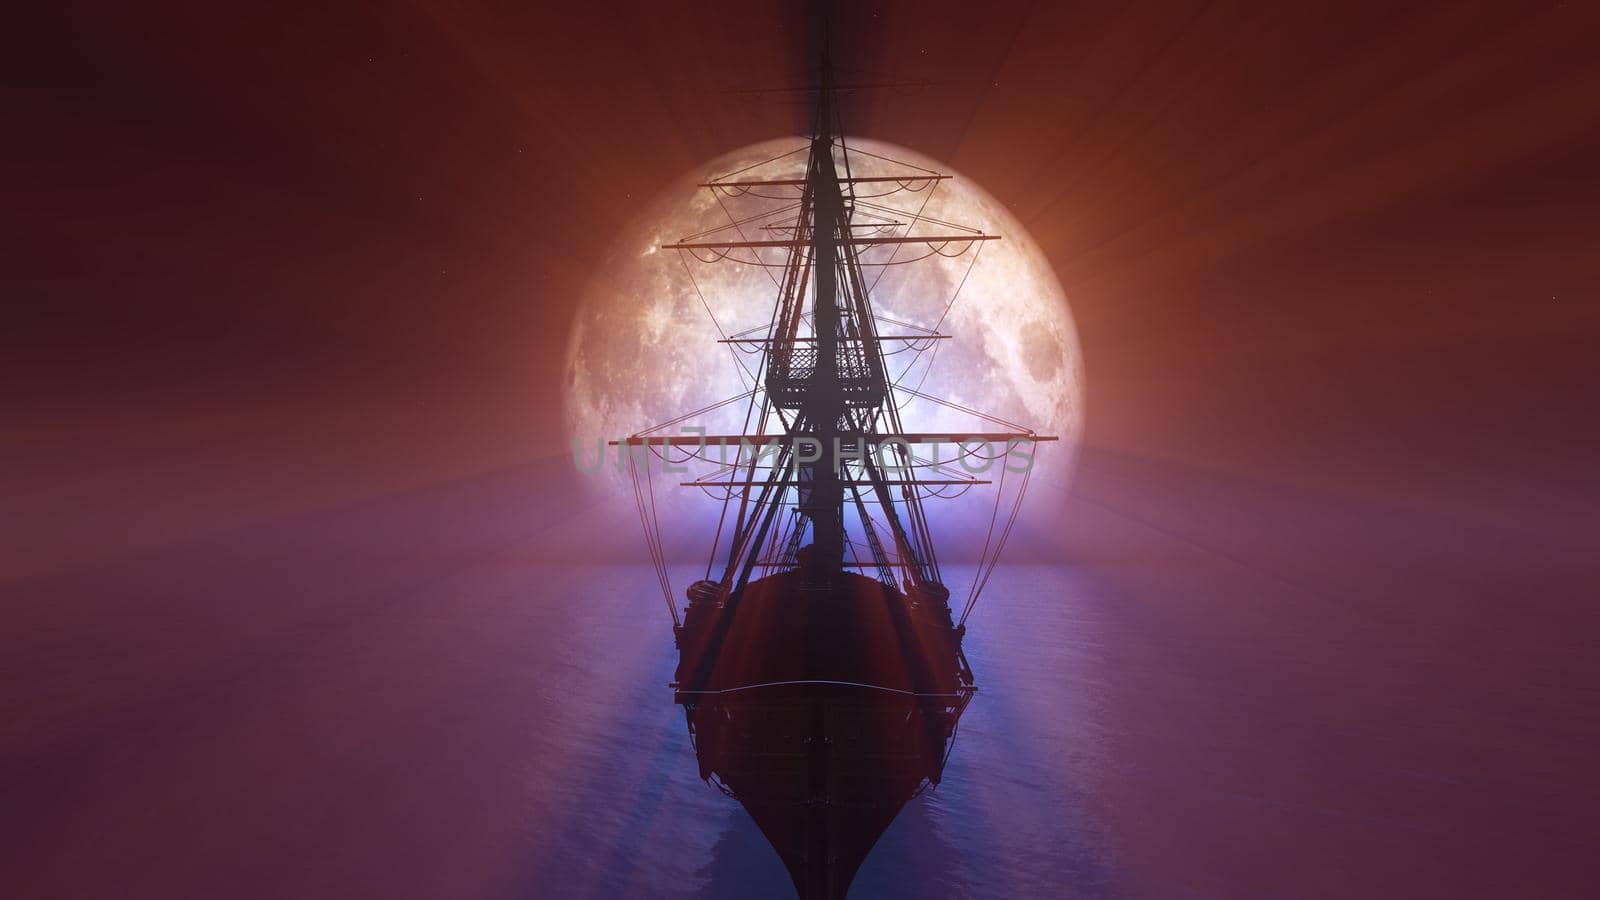 old ship in sea full moon illustration 3d rendering